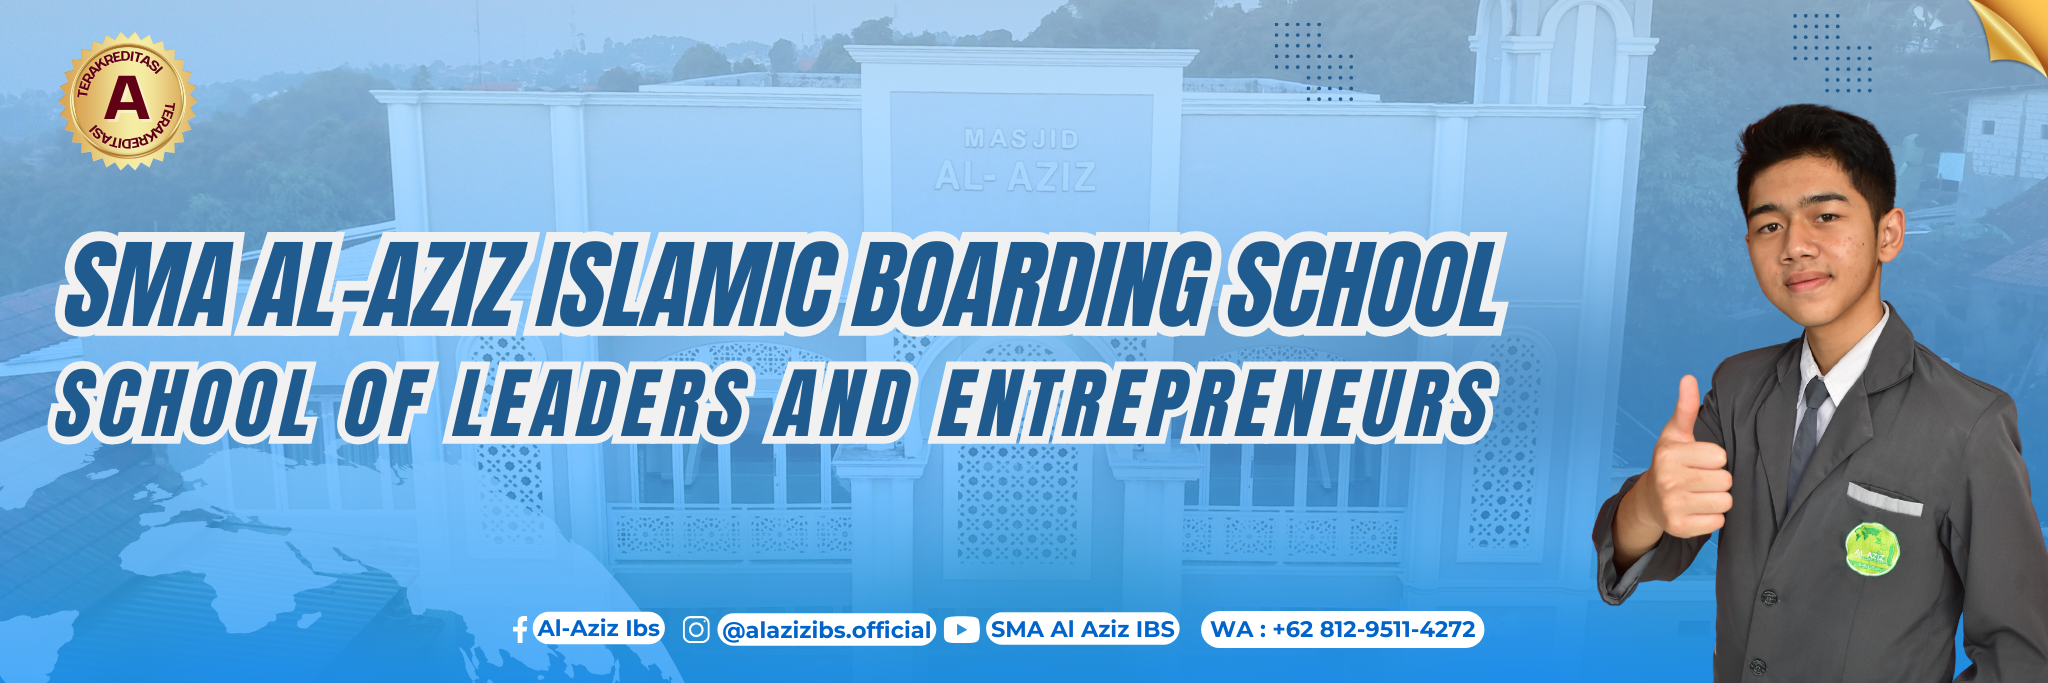 sma_al_aziz_islamic_boarding_school